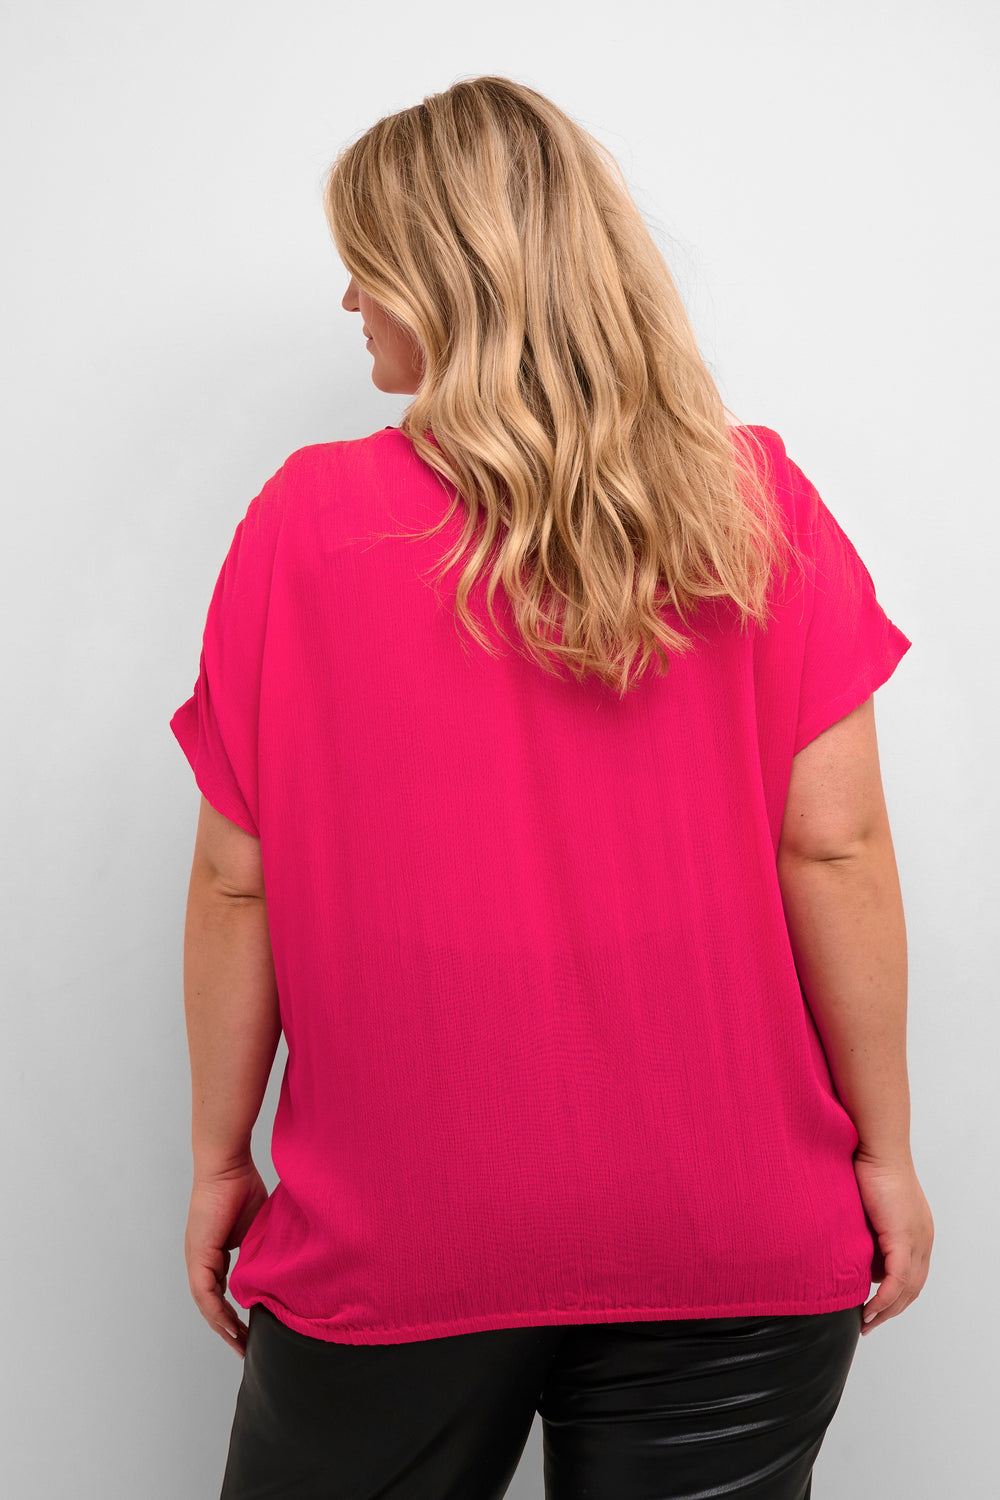 hot pink t-shirt - kaffe curve - - grote maten - dameskleding - kledingwinkel - herent - leuven